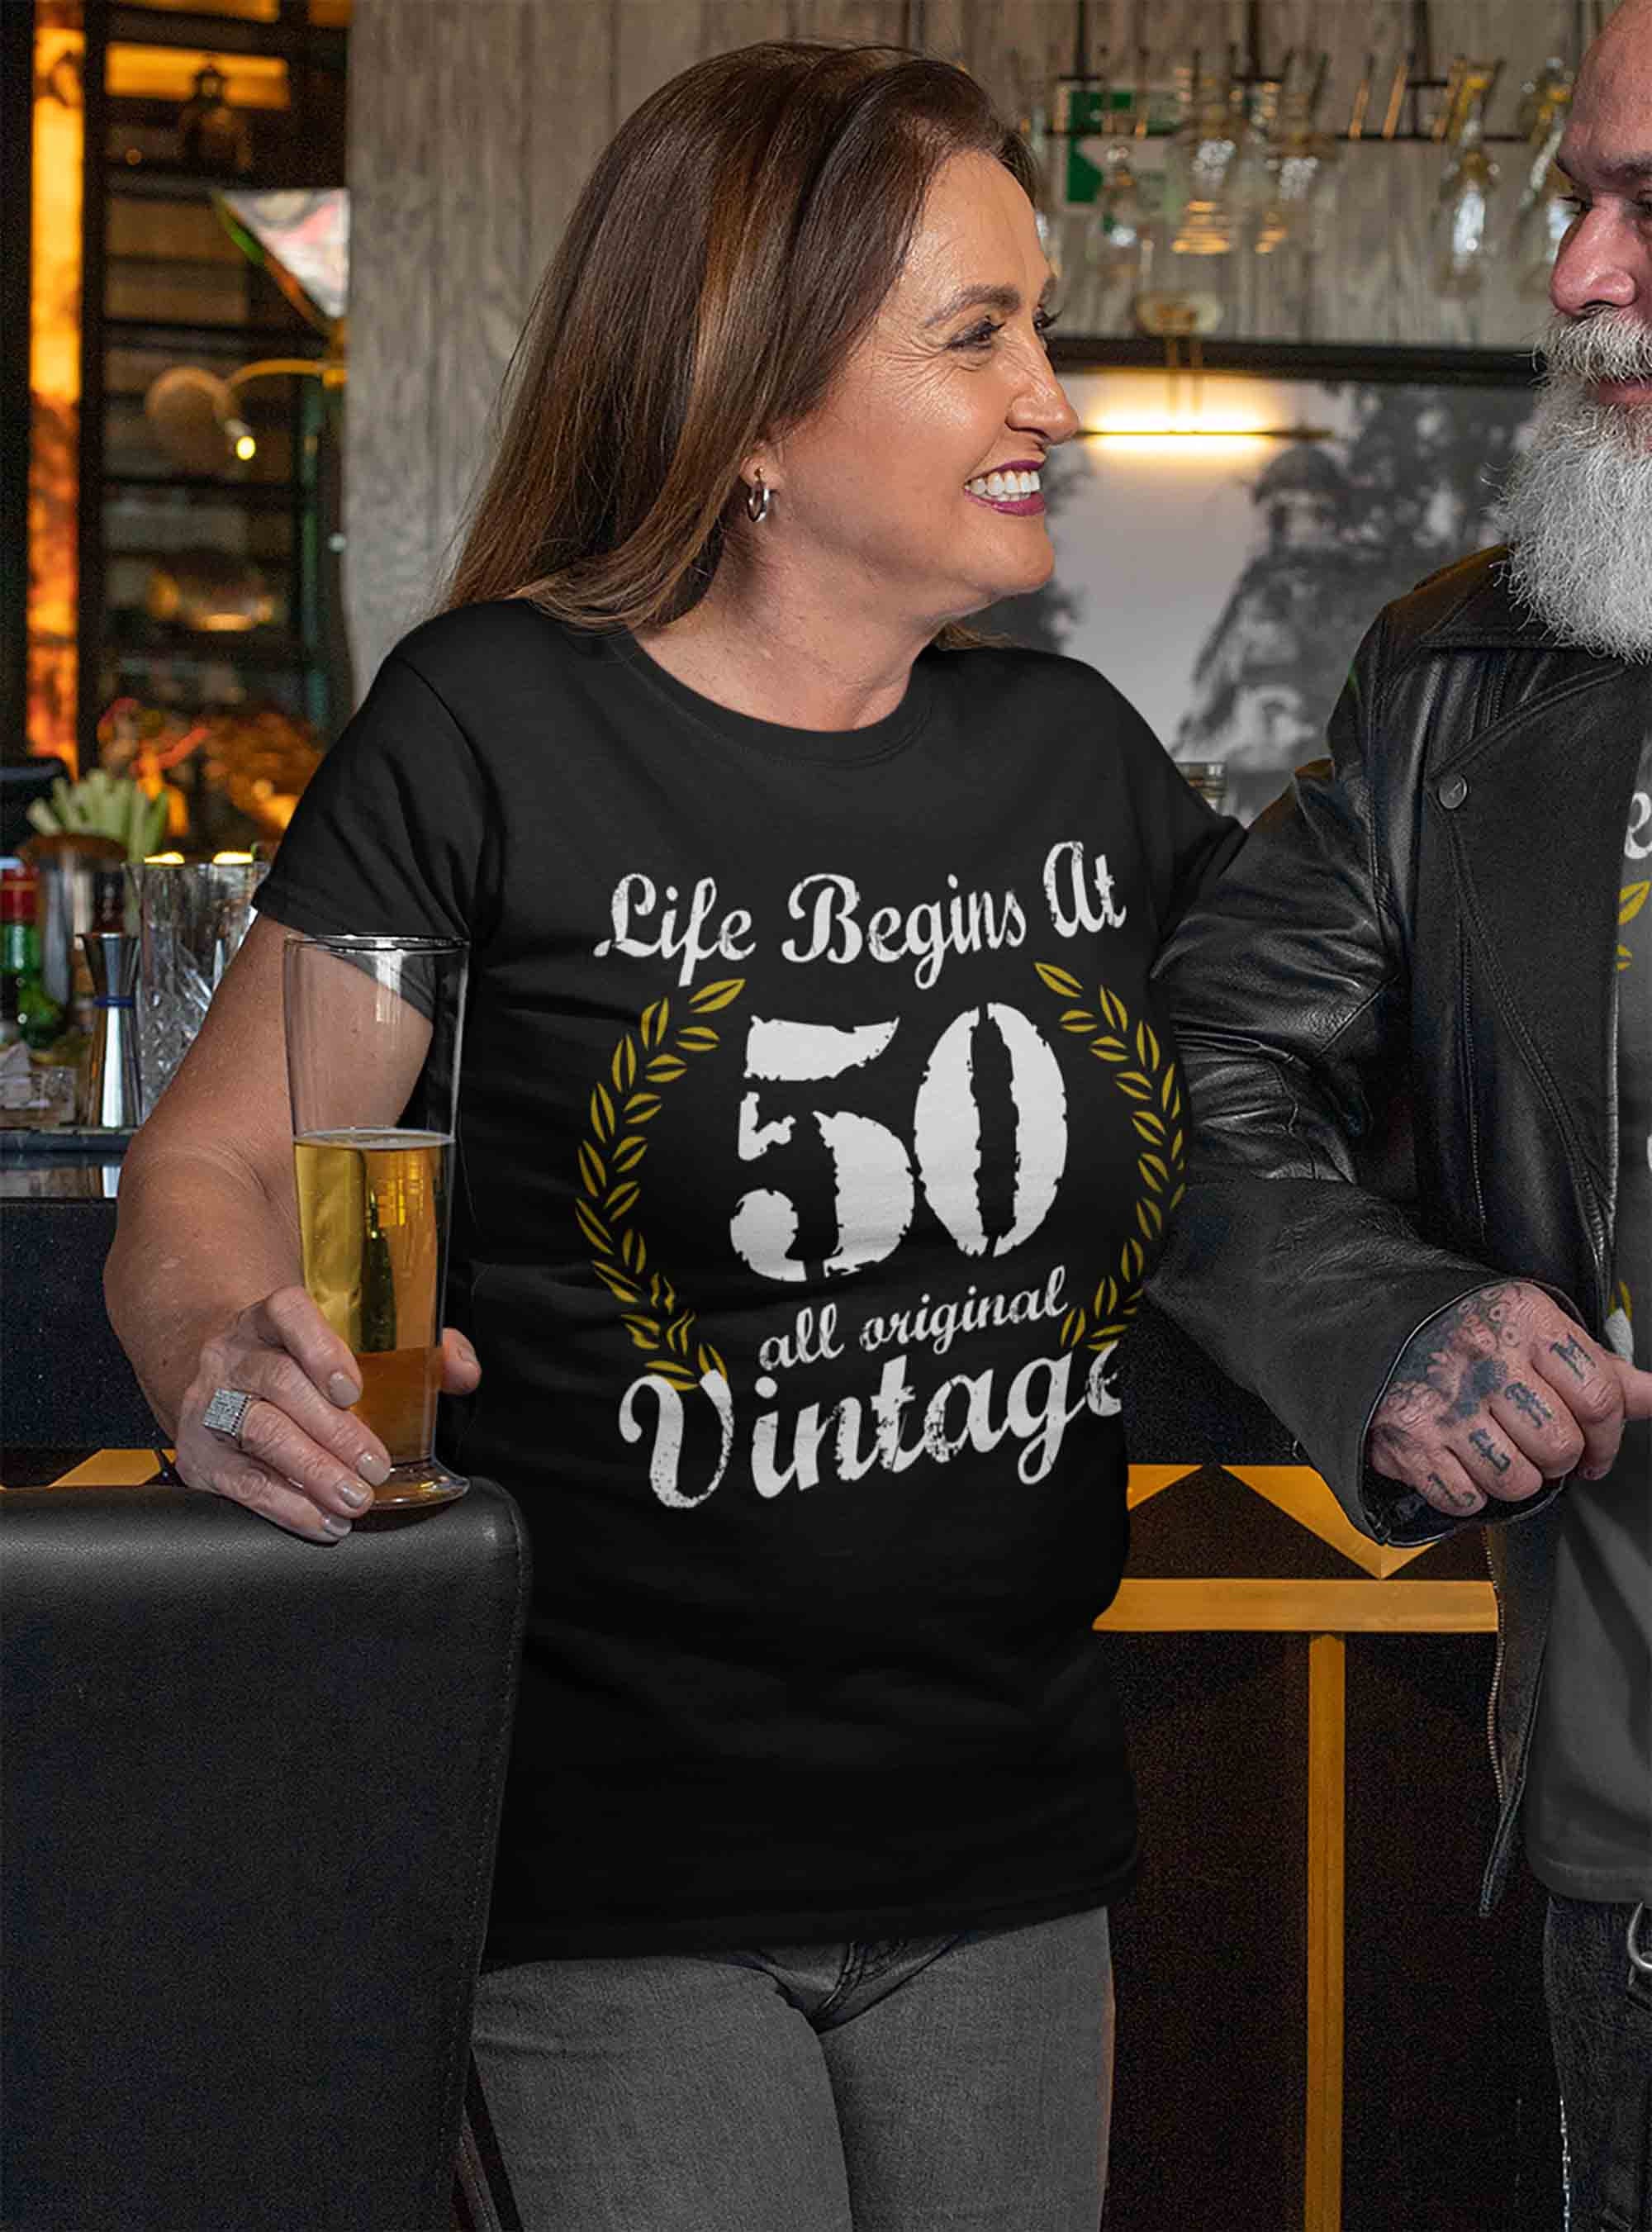 smeltet Mos trojansk hest Women's Funny 50th Birthday T Shirt Life Begins at Shirts - Etsy